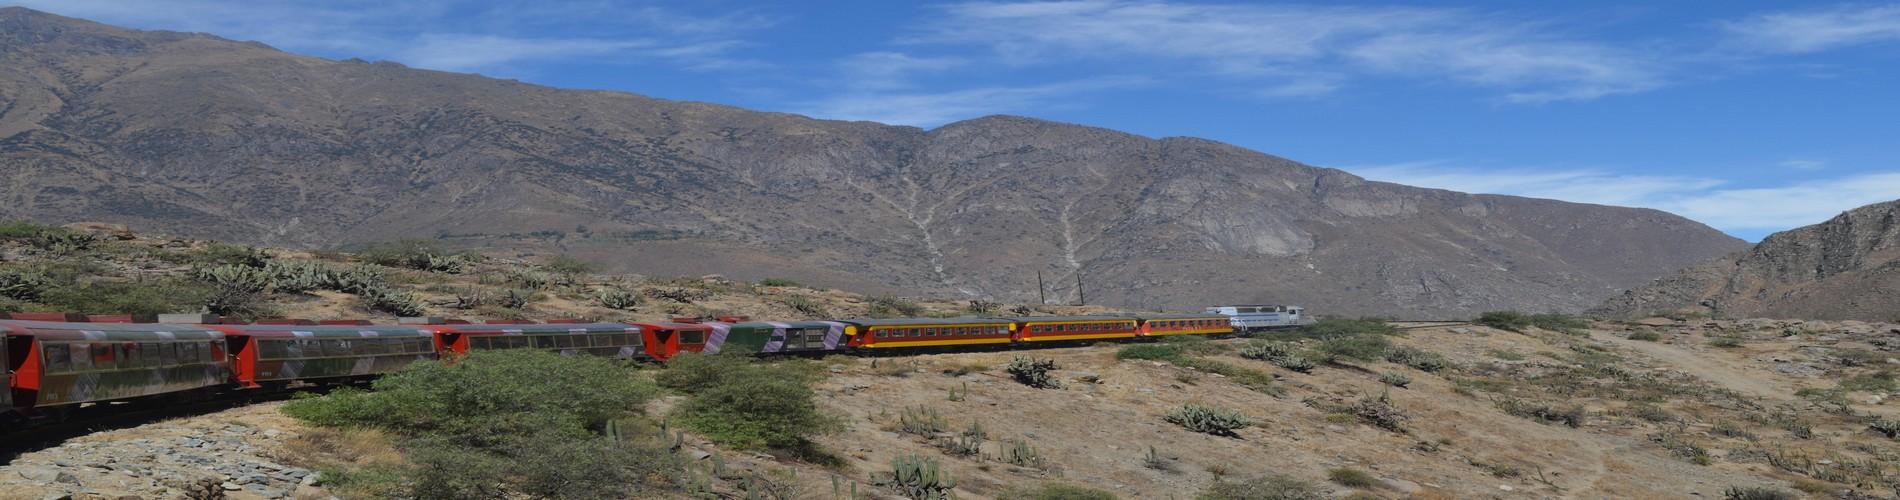 EXPLORING PERU'S PANORAMIC TRAIN ROUTES